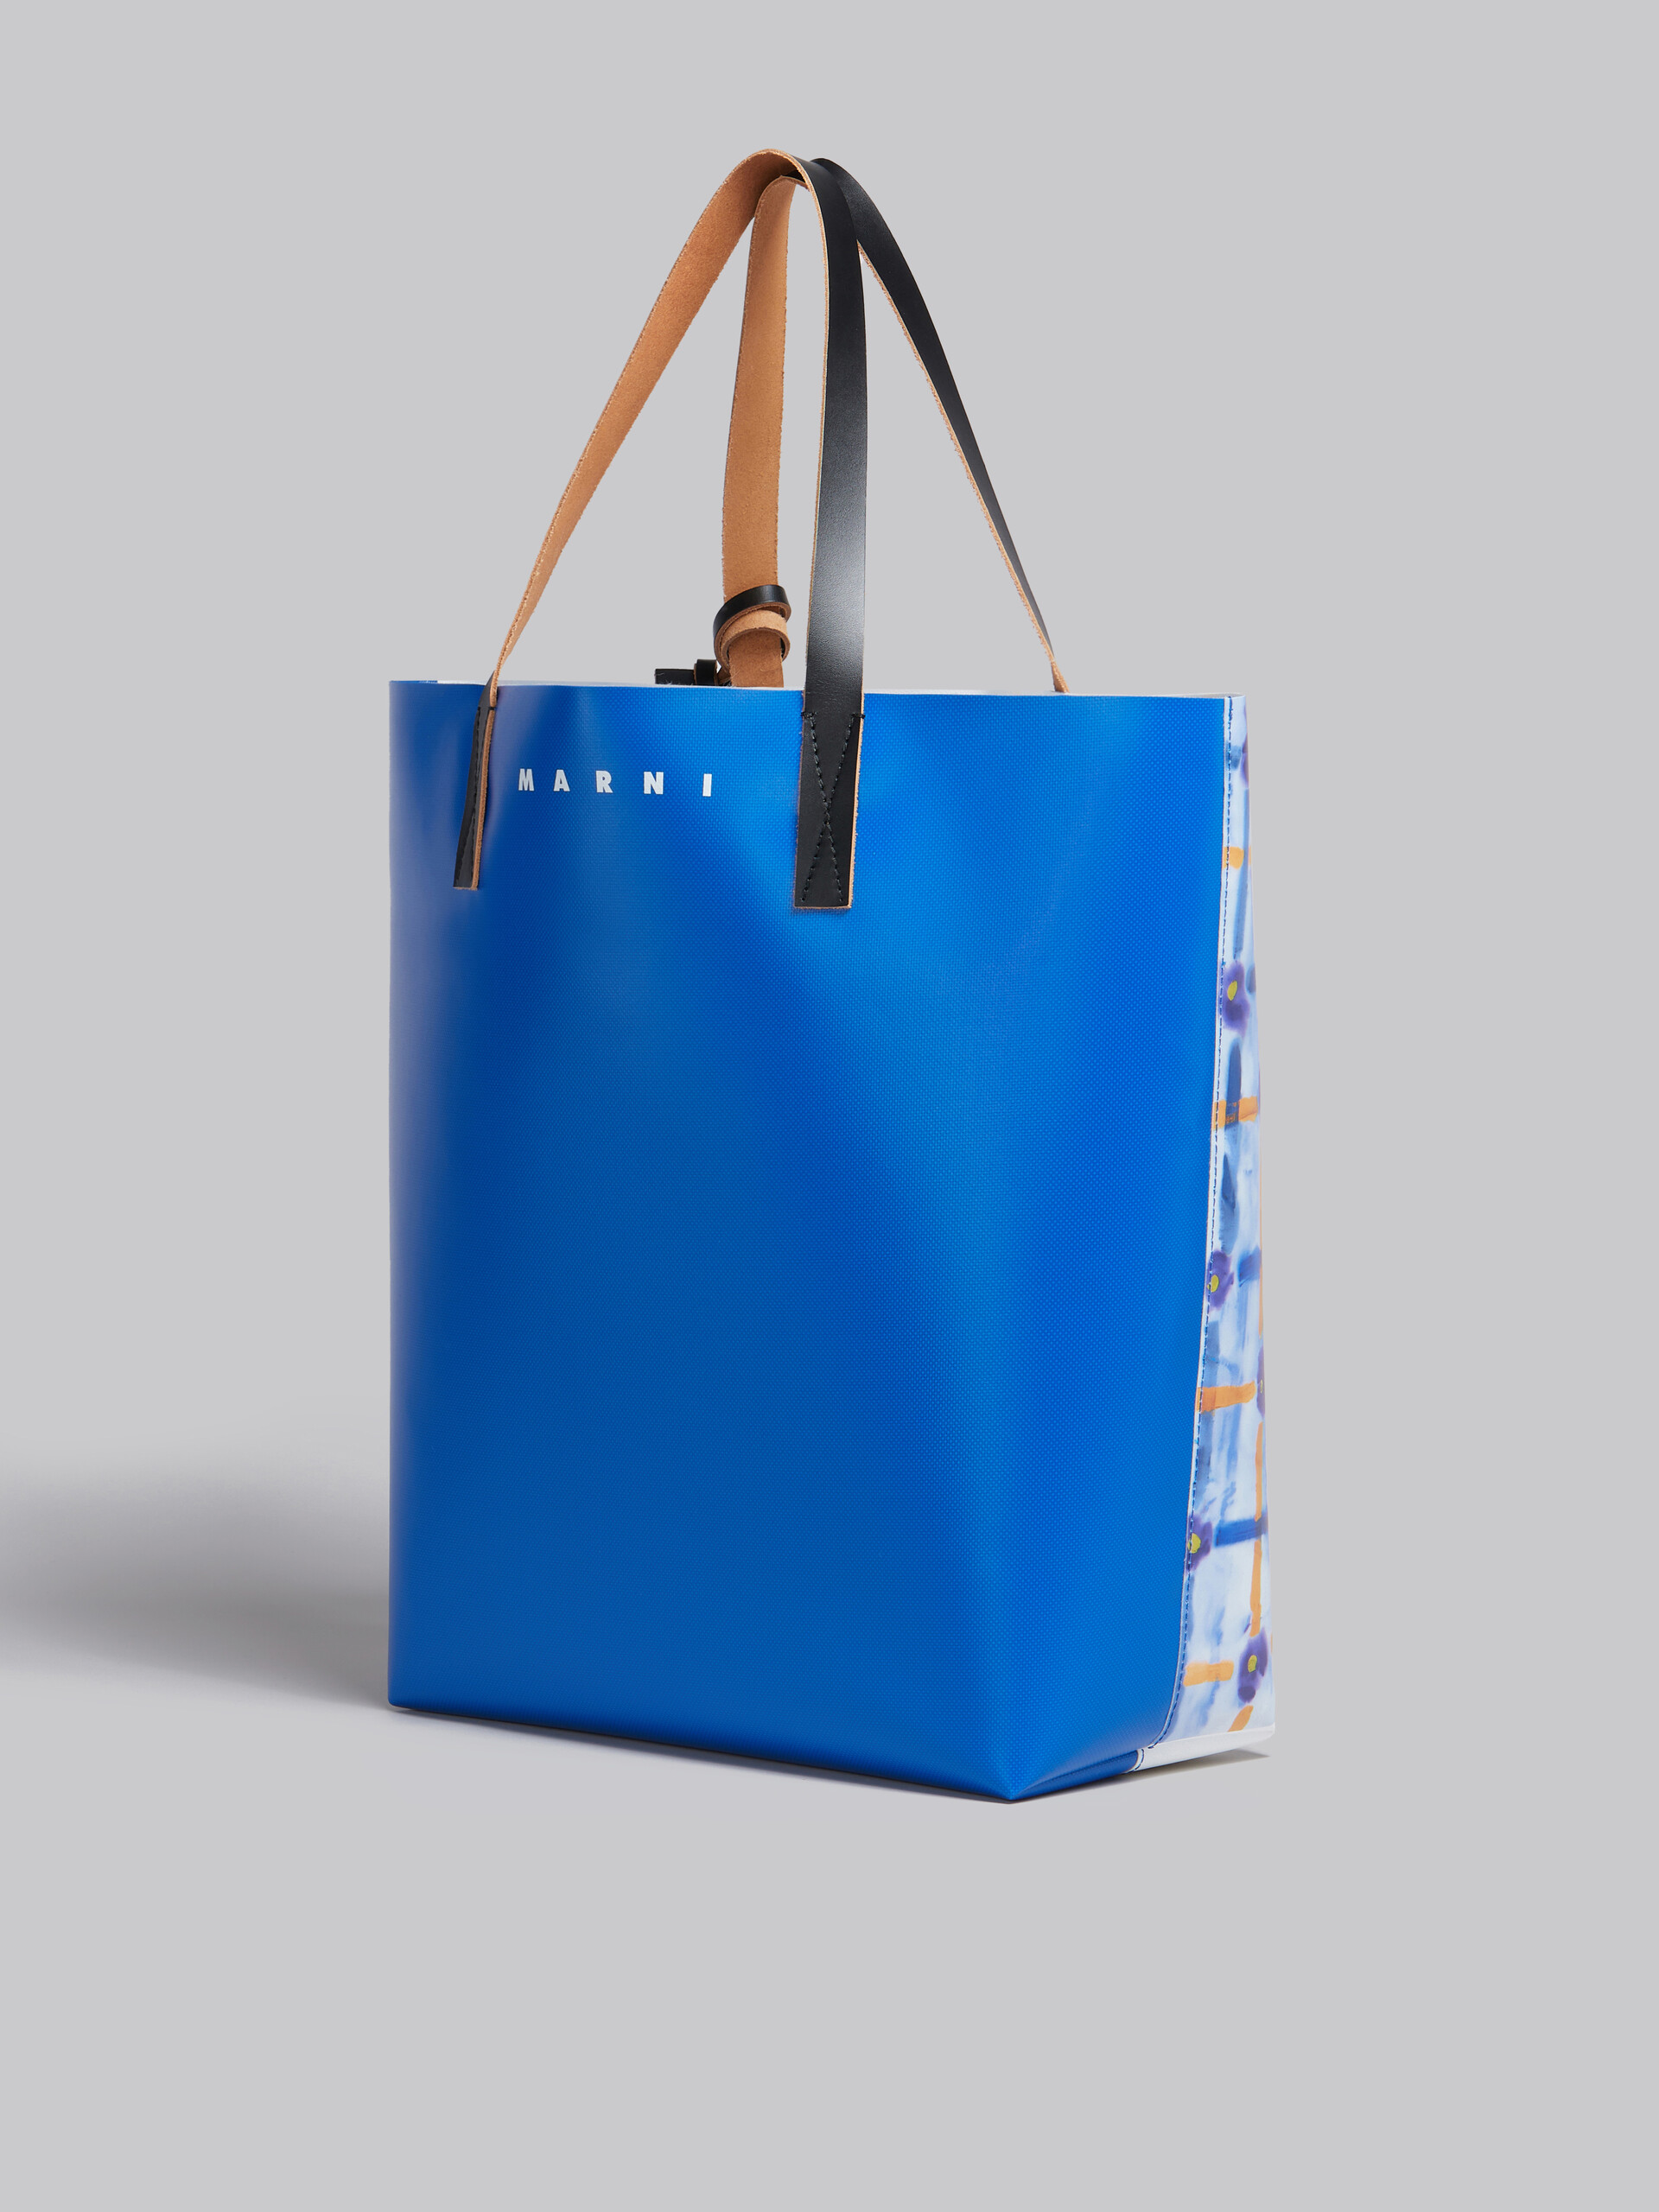 Sac cabas bleu avec imprimé Saraband - Sacs cabas - Image 2